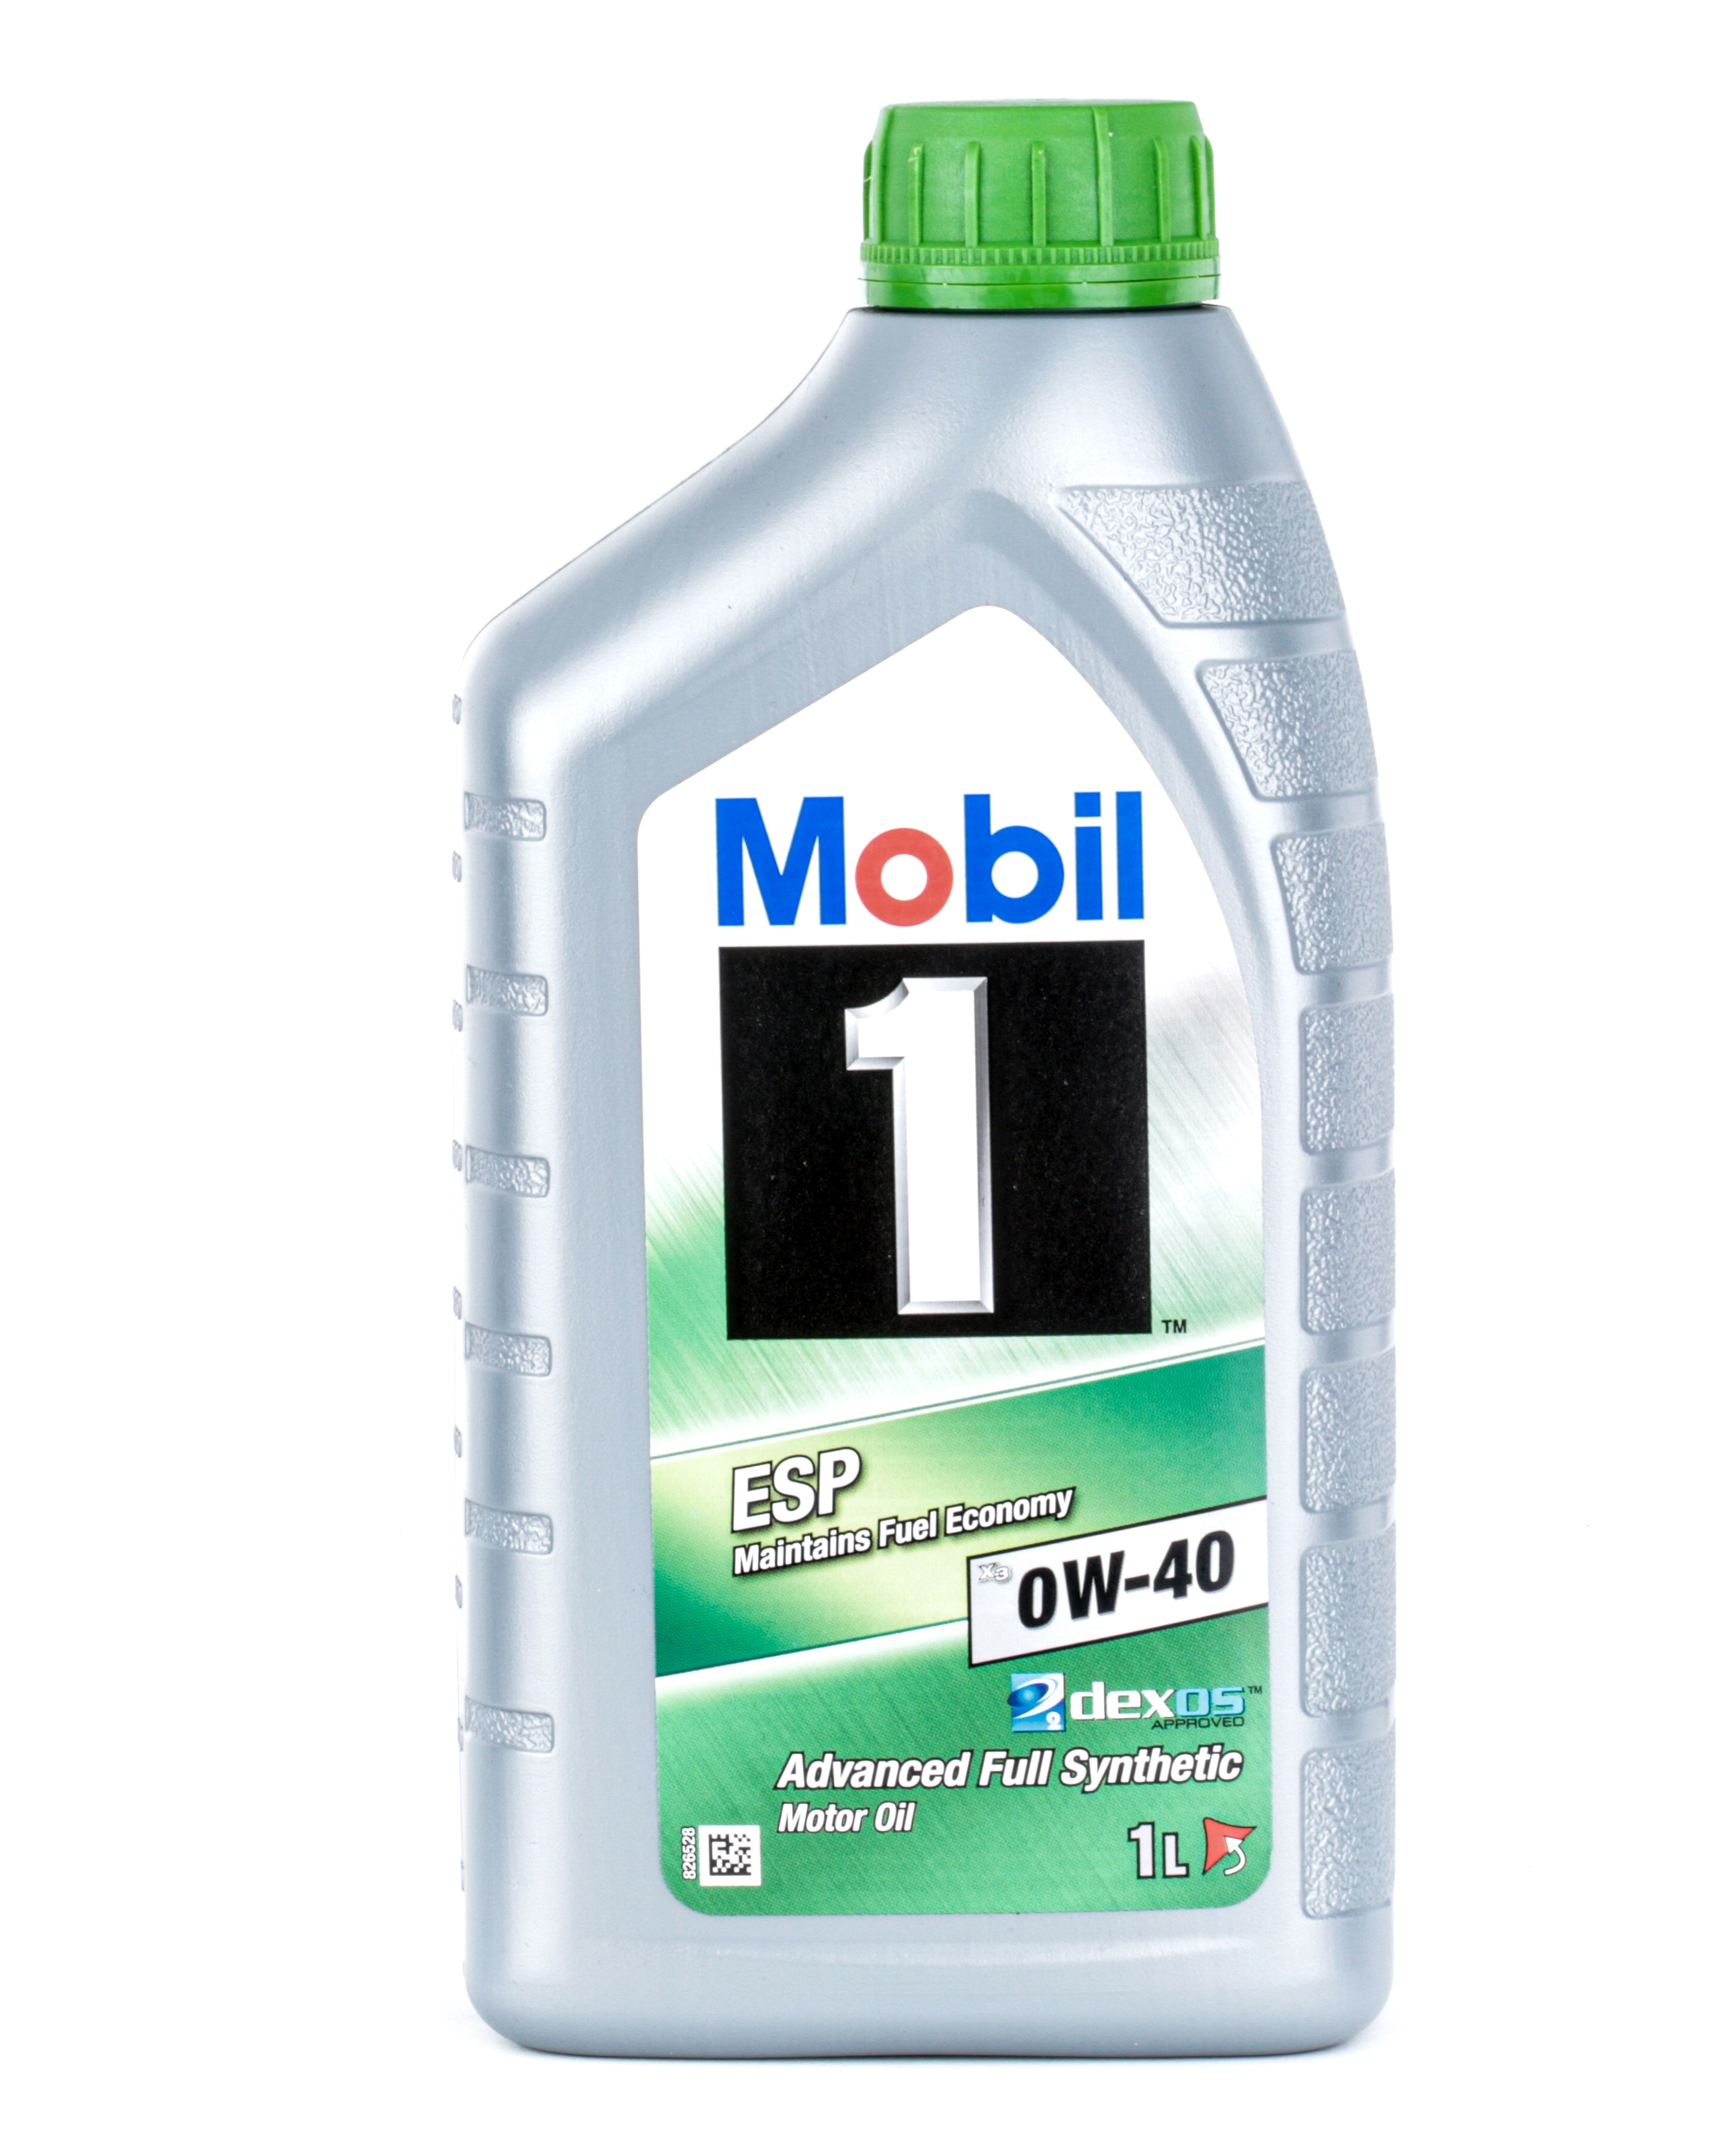 Automobile oil DEXOS 2 MOBIL petrol - 151502 1, ESP